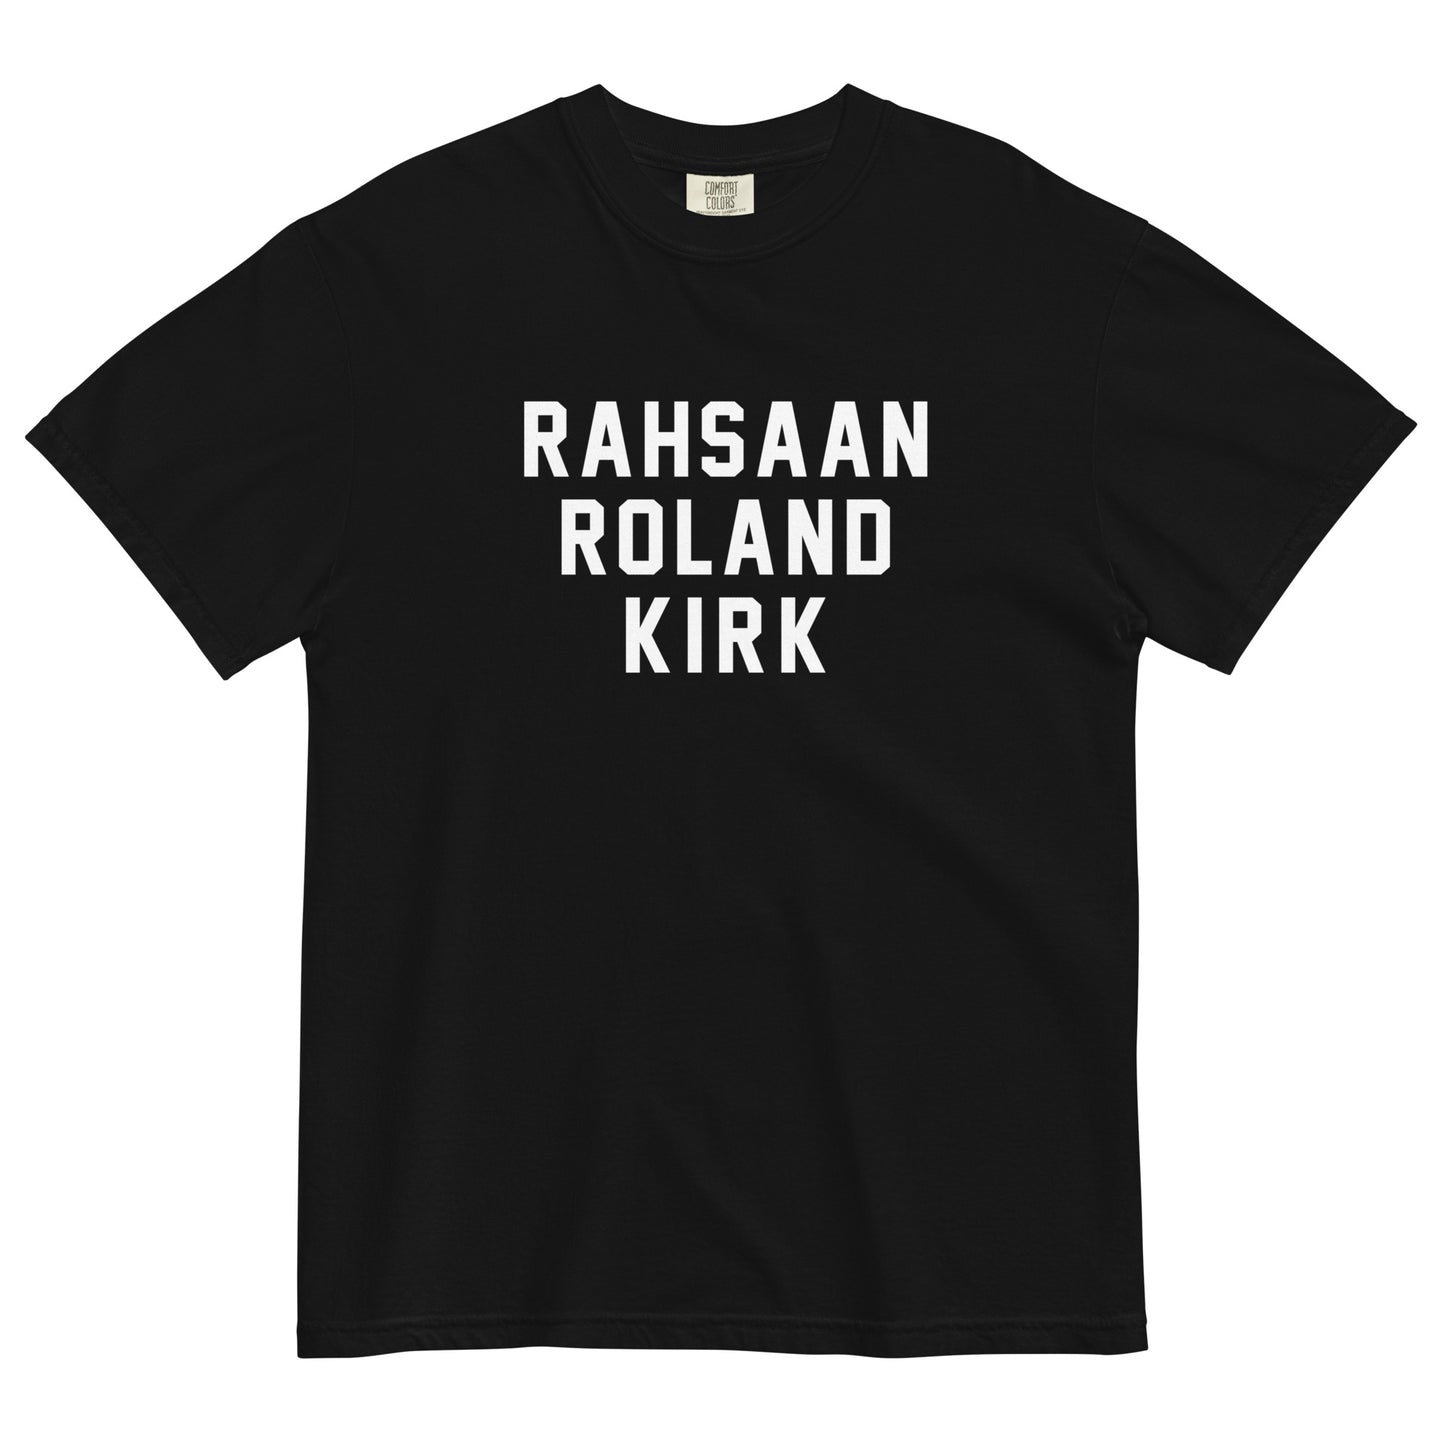 RAHSAAN ROLAND KIRK